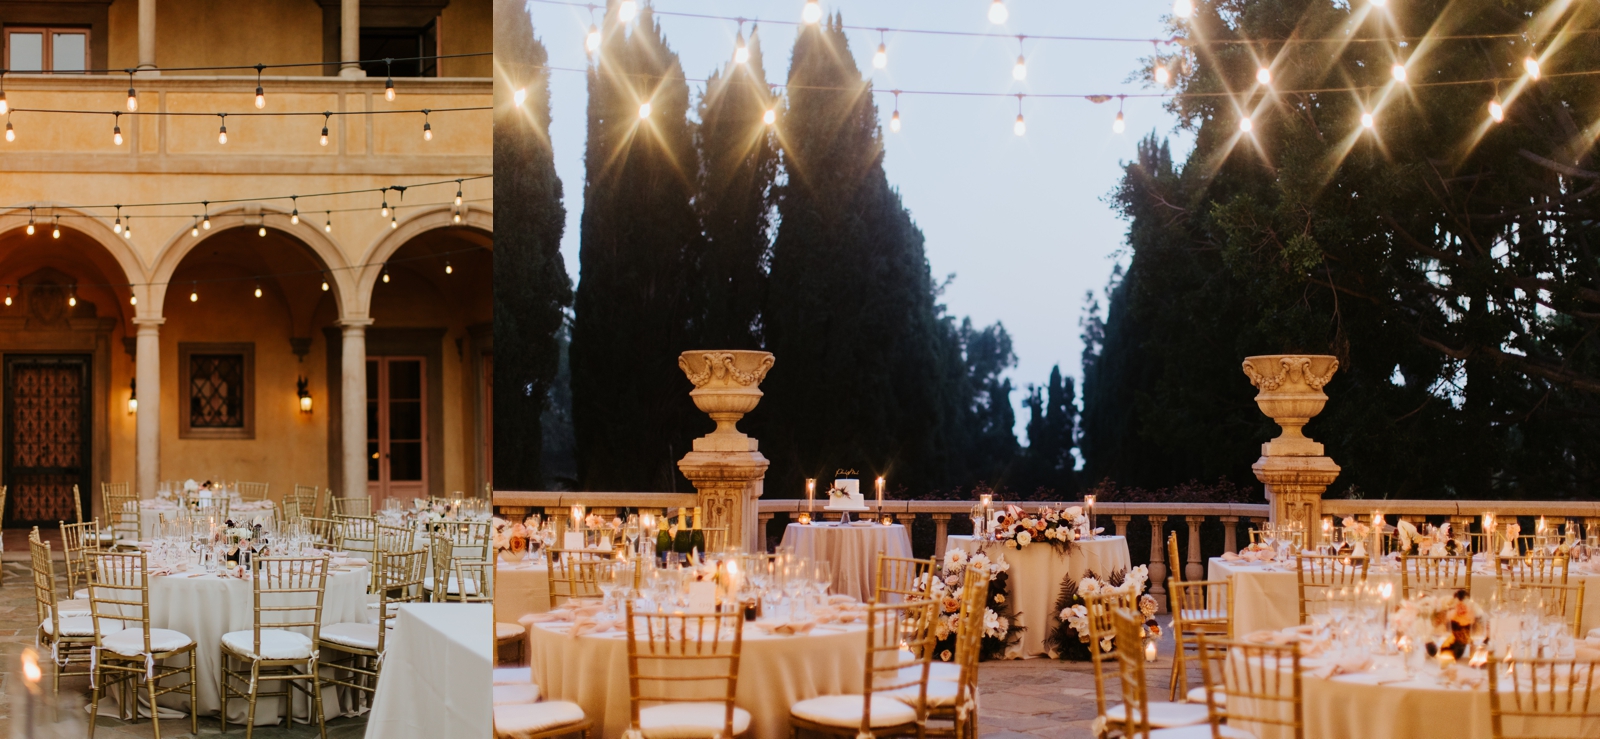 Tuscan wedding venues